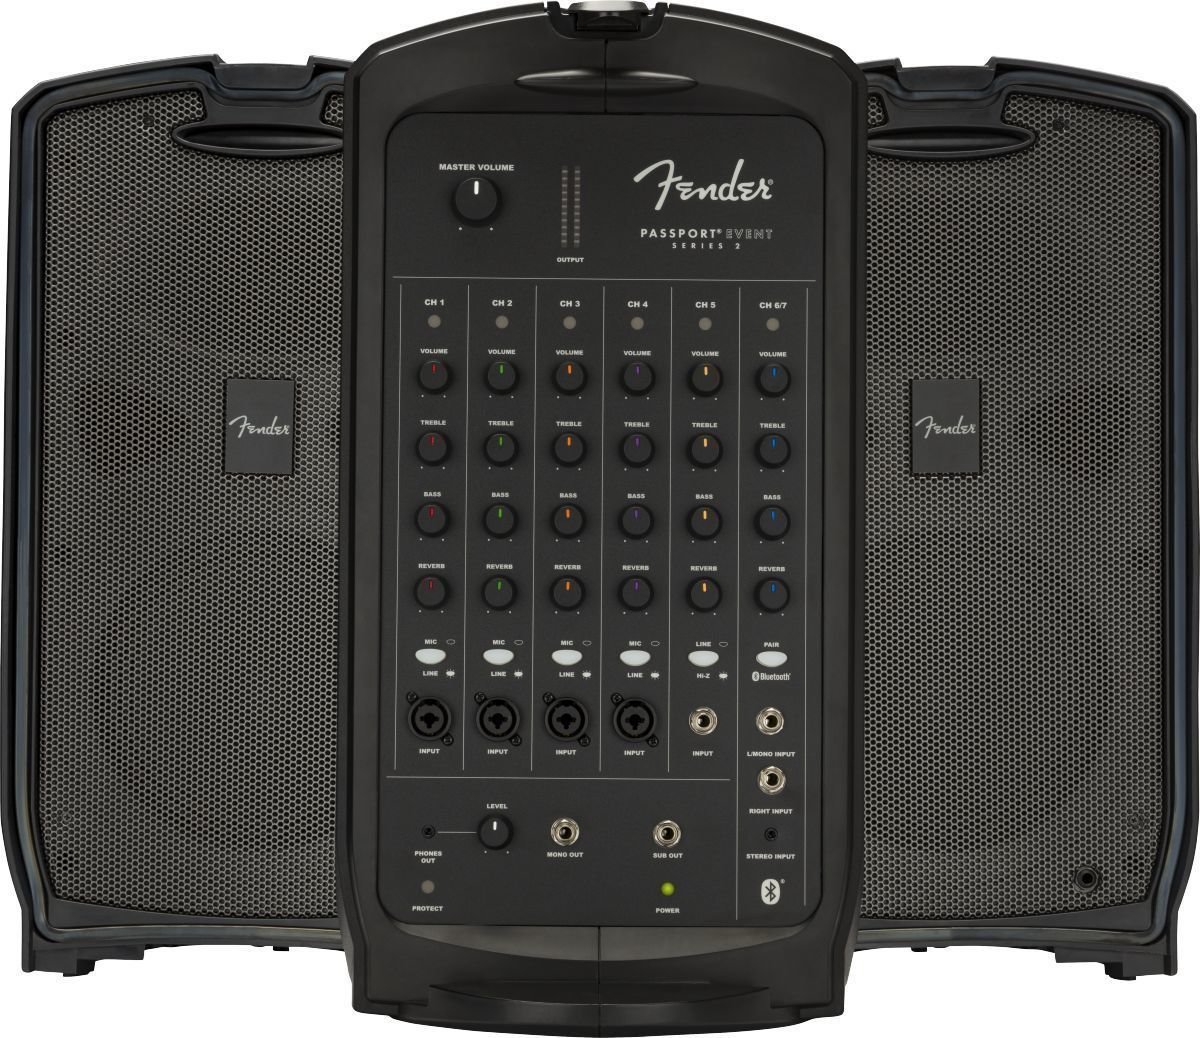 Hordozható PA hangrendszer Fender Passport Event Series 2 Hordozható PA hangrendszer